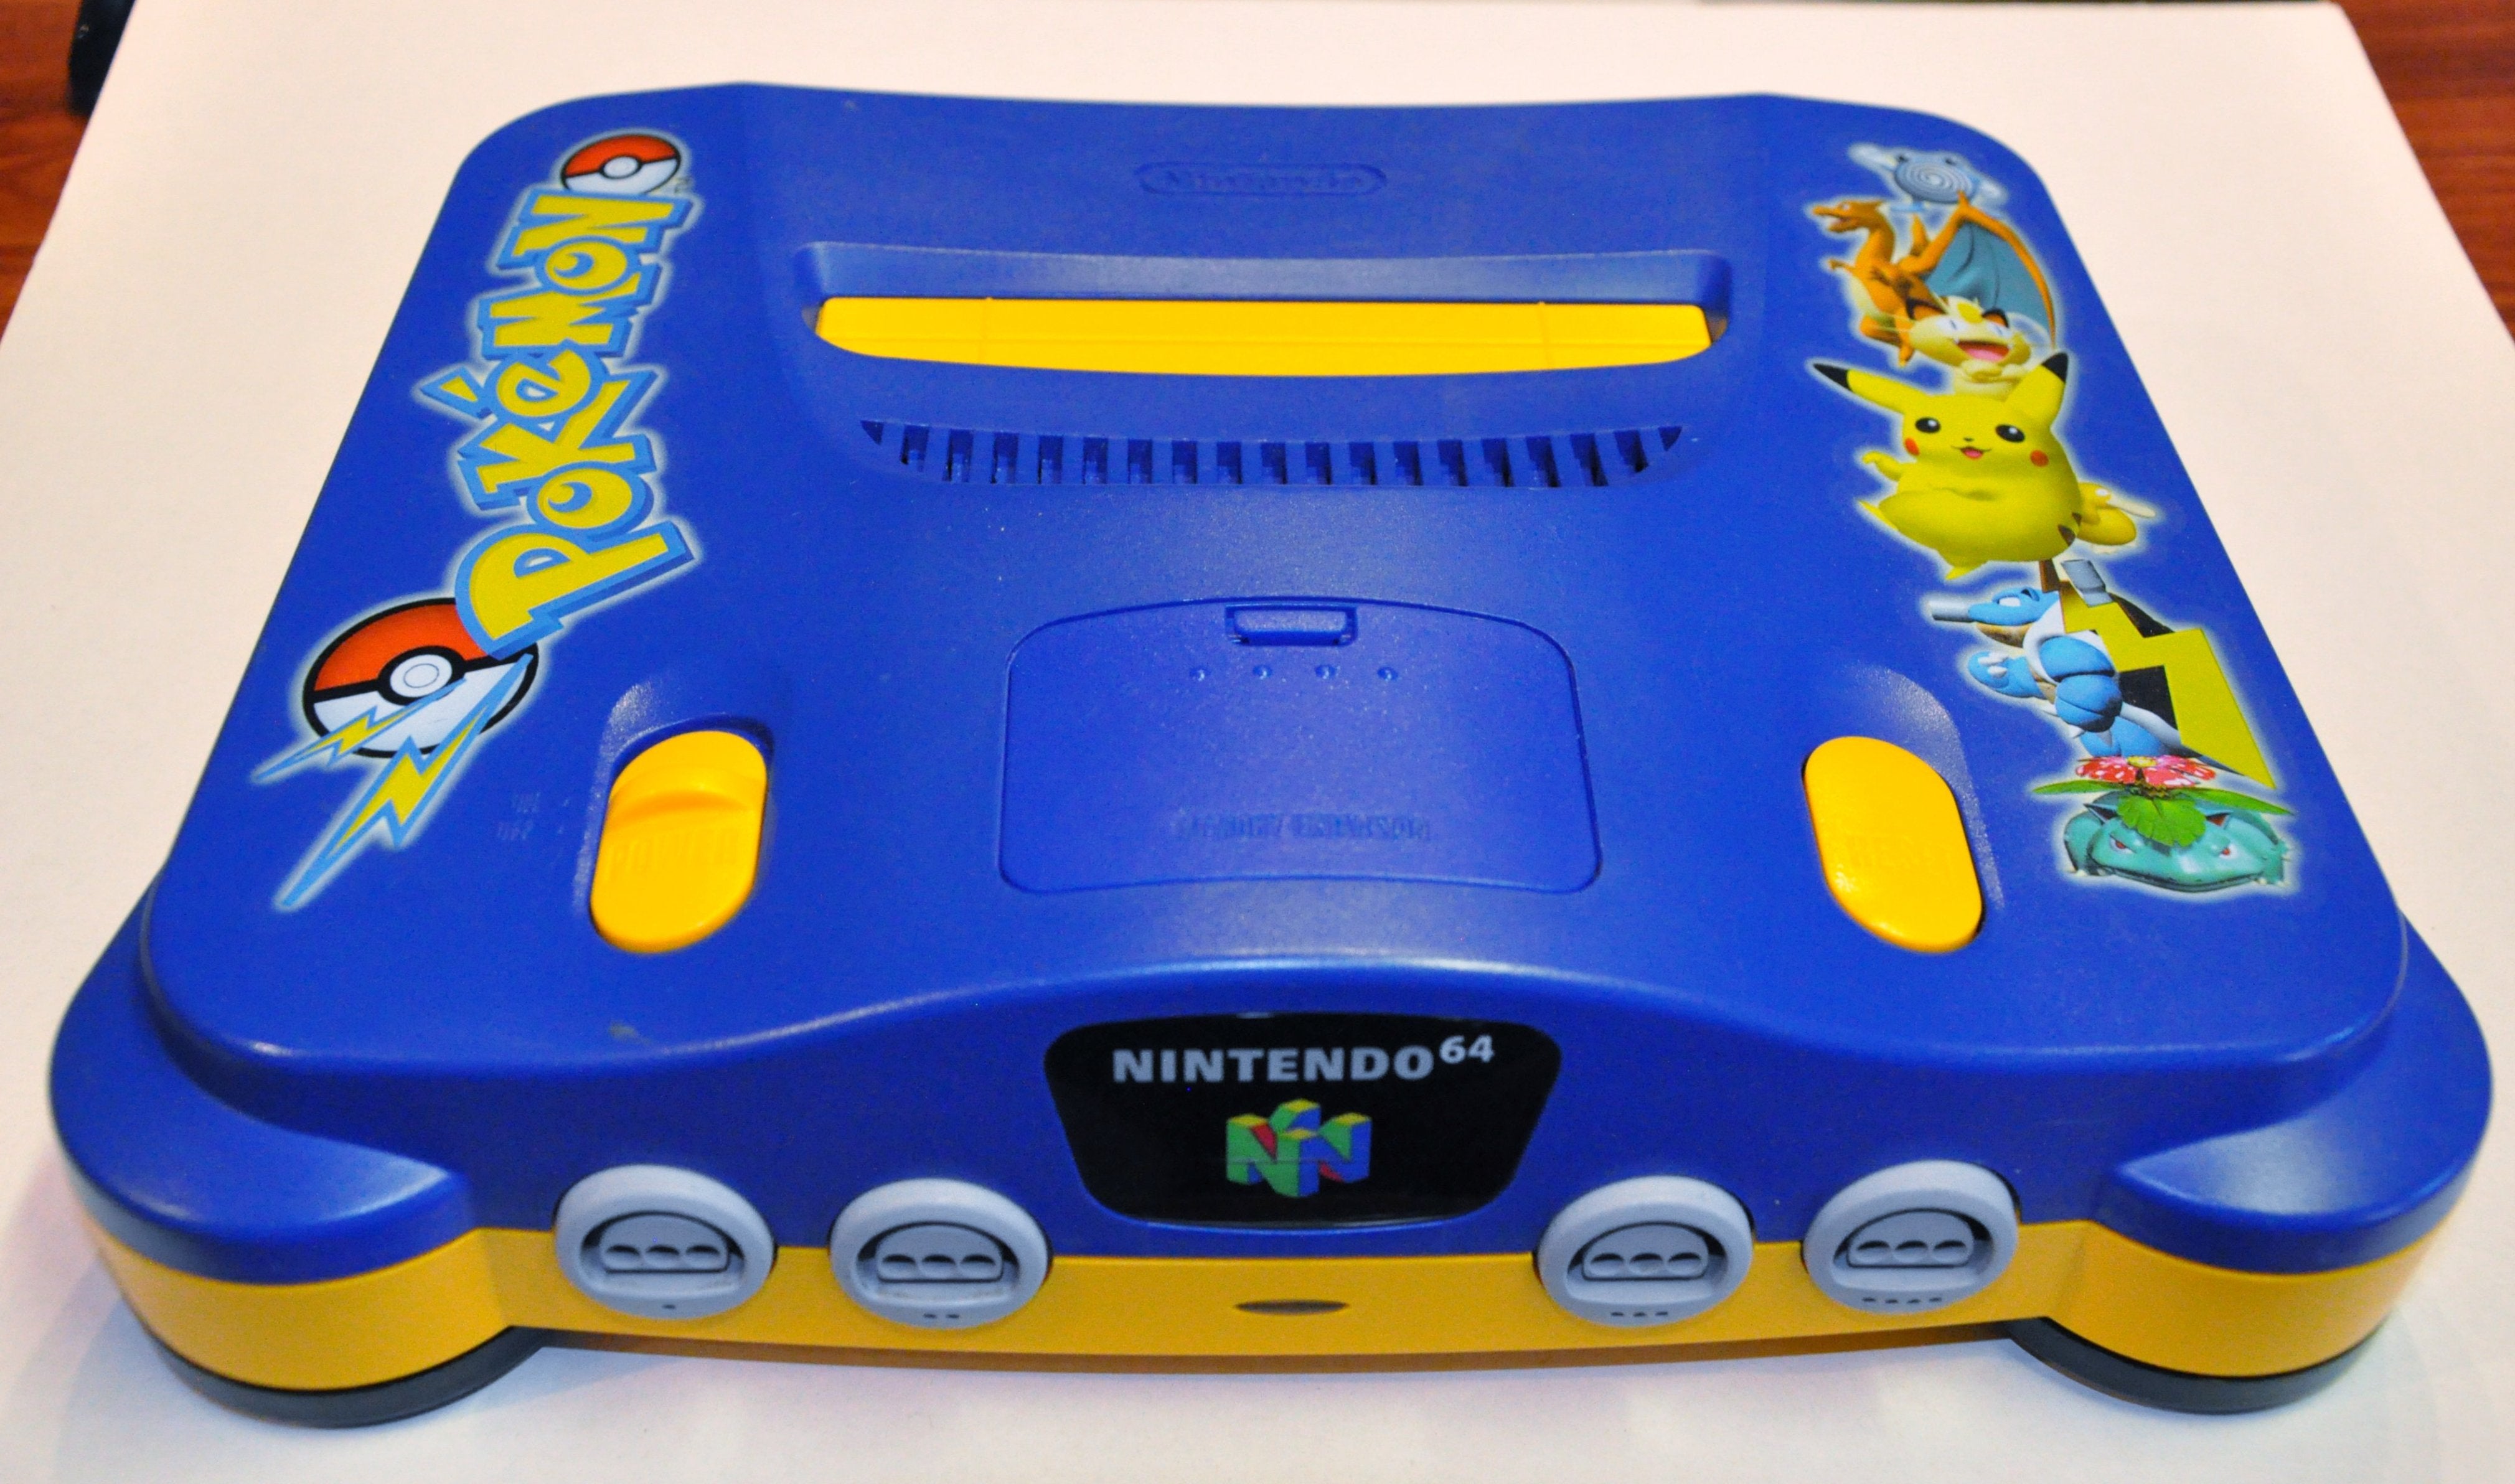 Console | Nintendo 64 | N64 Pokemon Special Edition Console NUS-001 + Controller